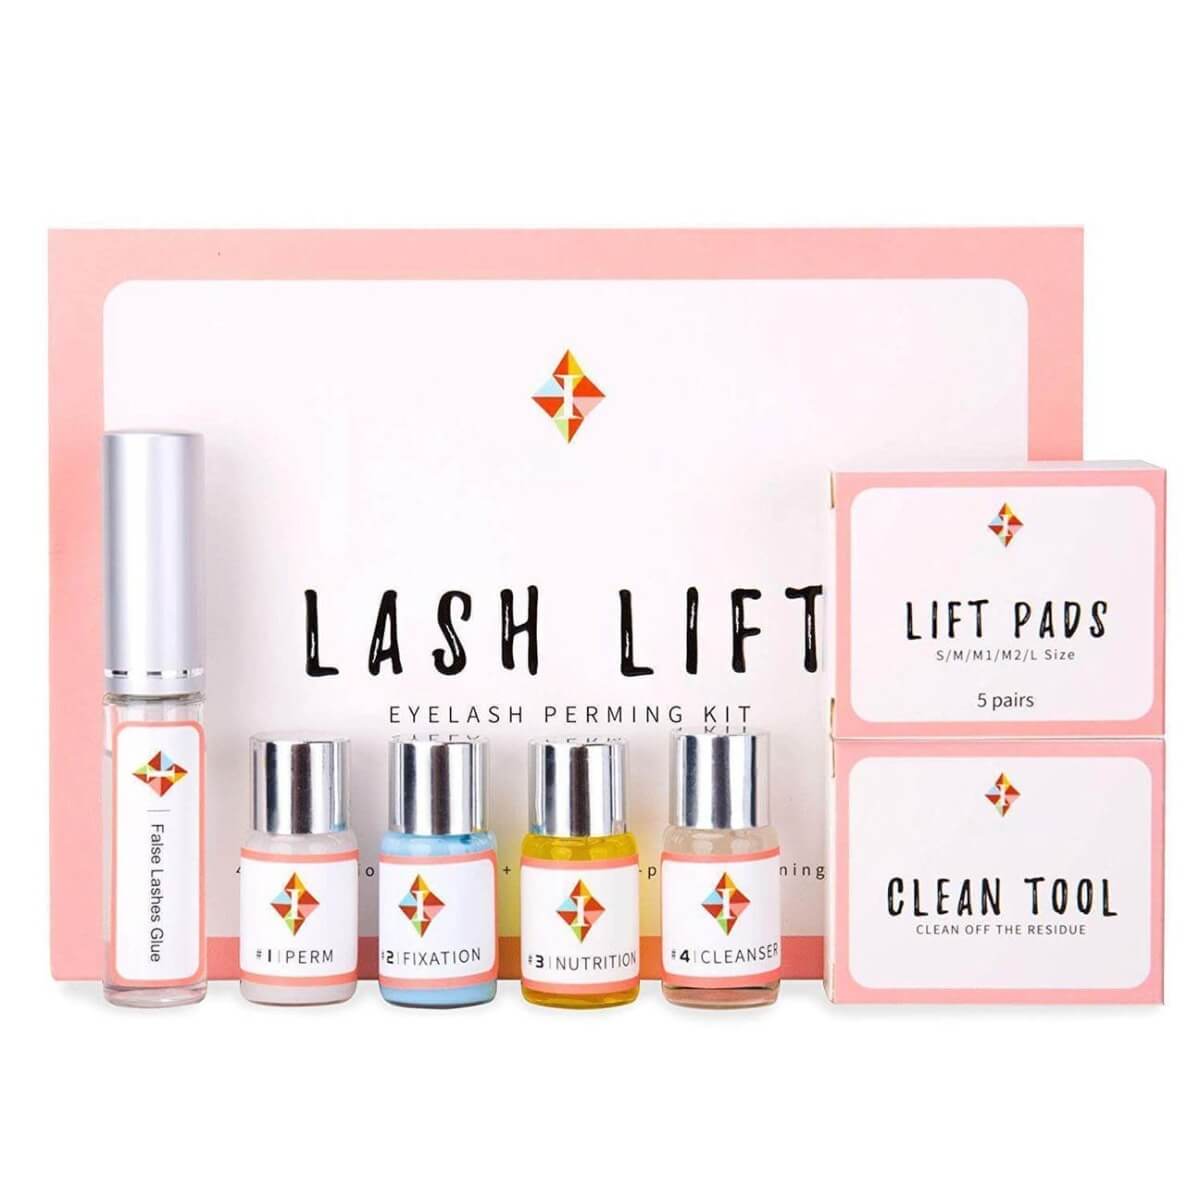 Lash Lift Pro Kit. Shop Eye Makeup on Mounteen. Worldwide shipping available.